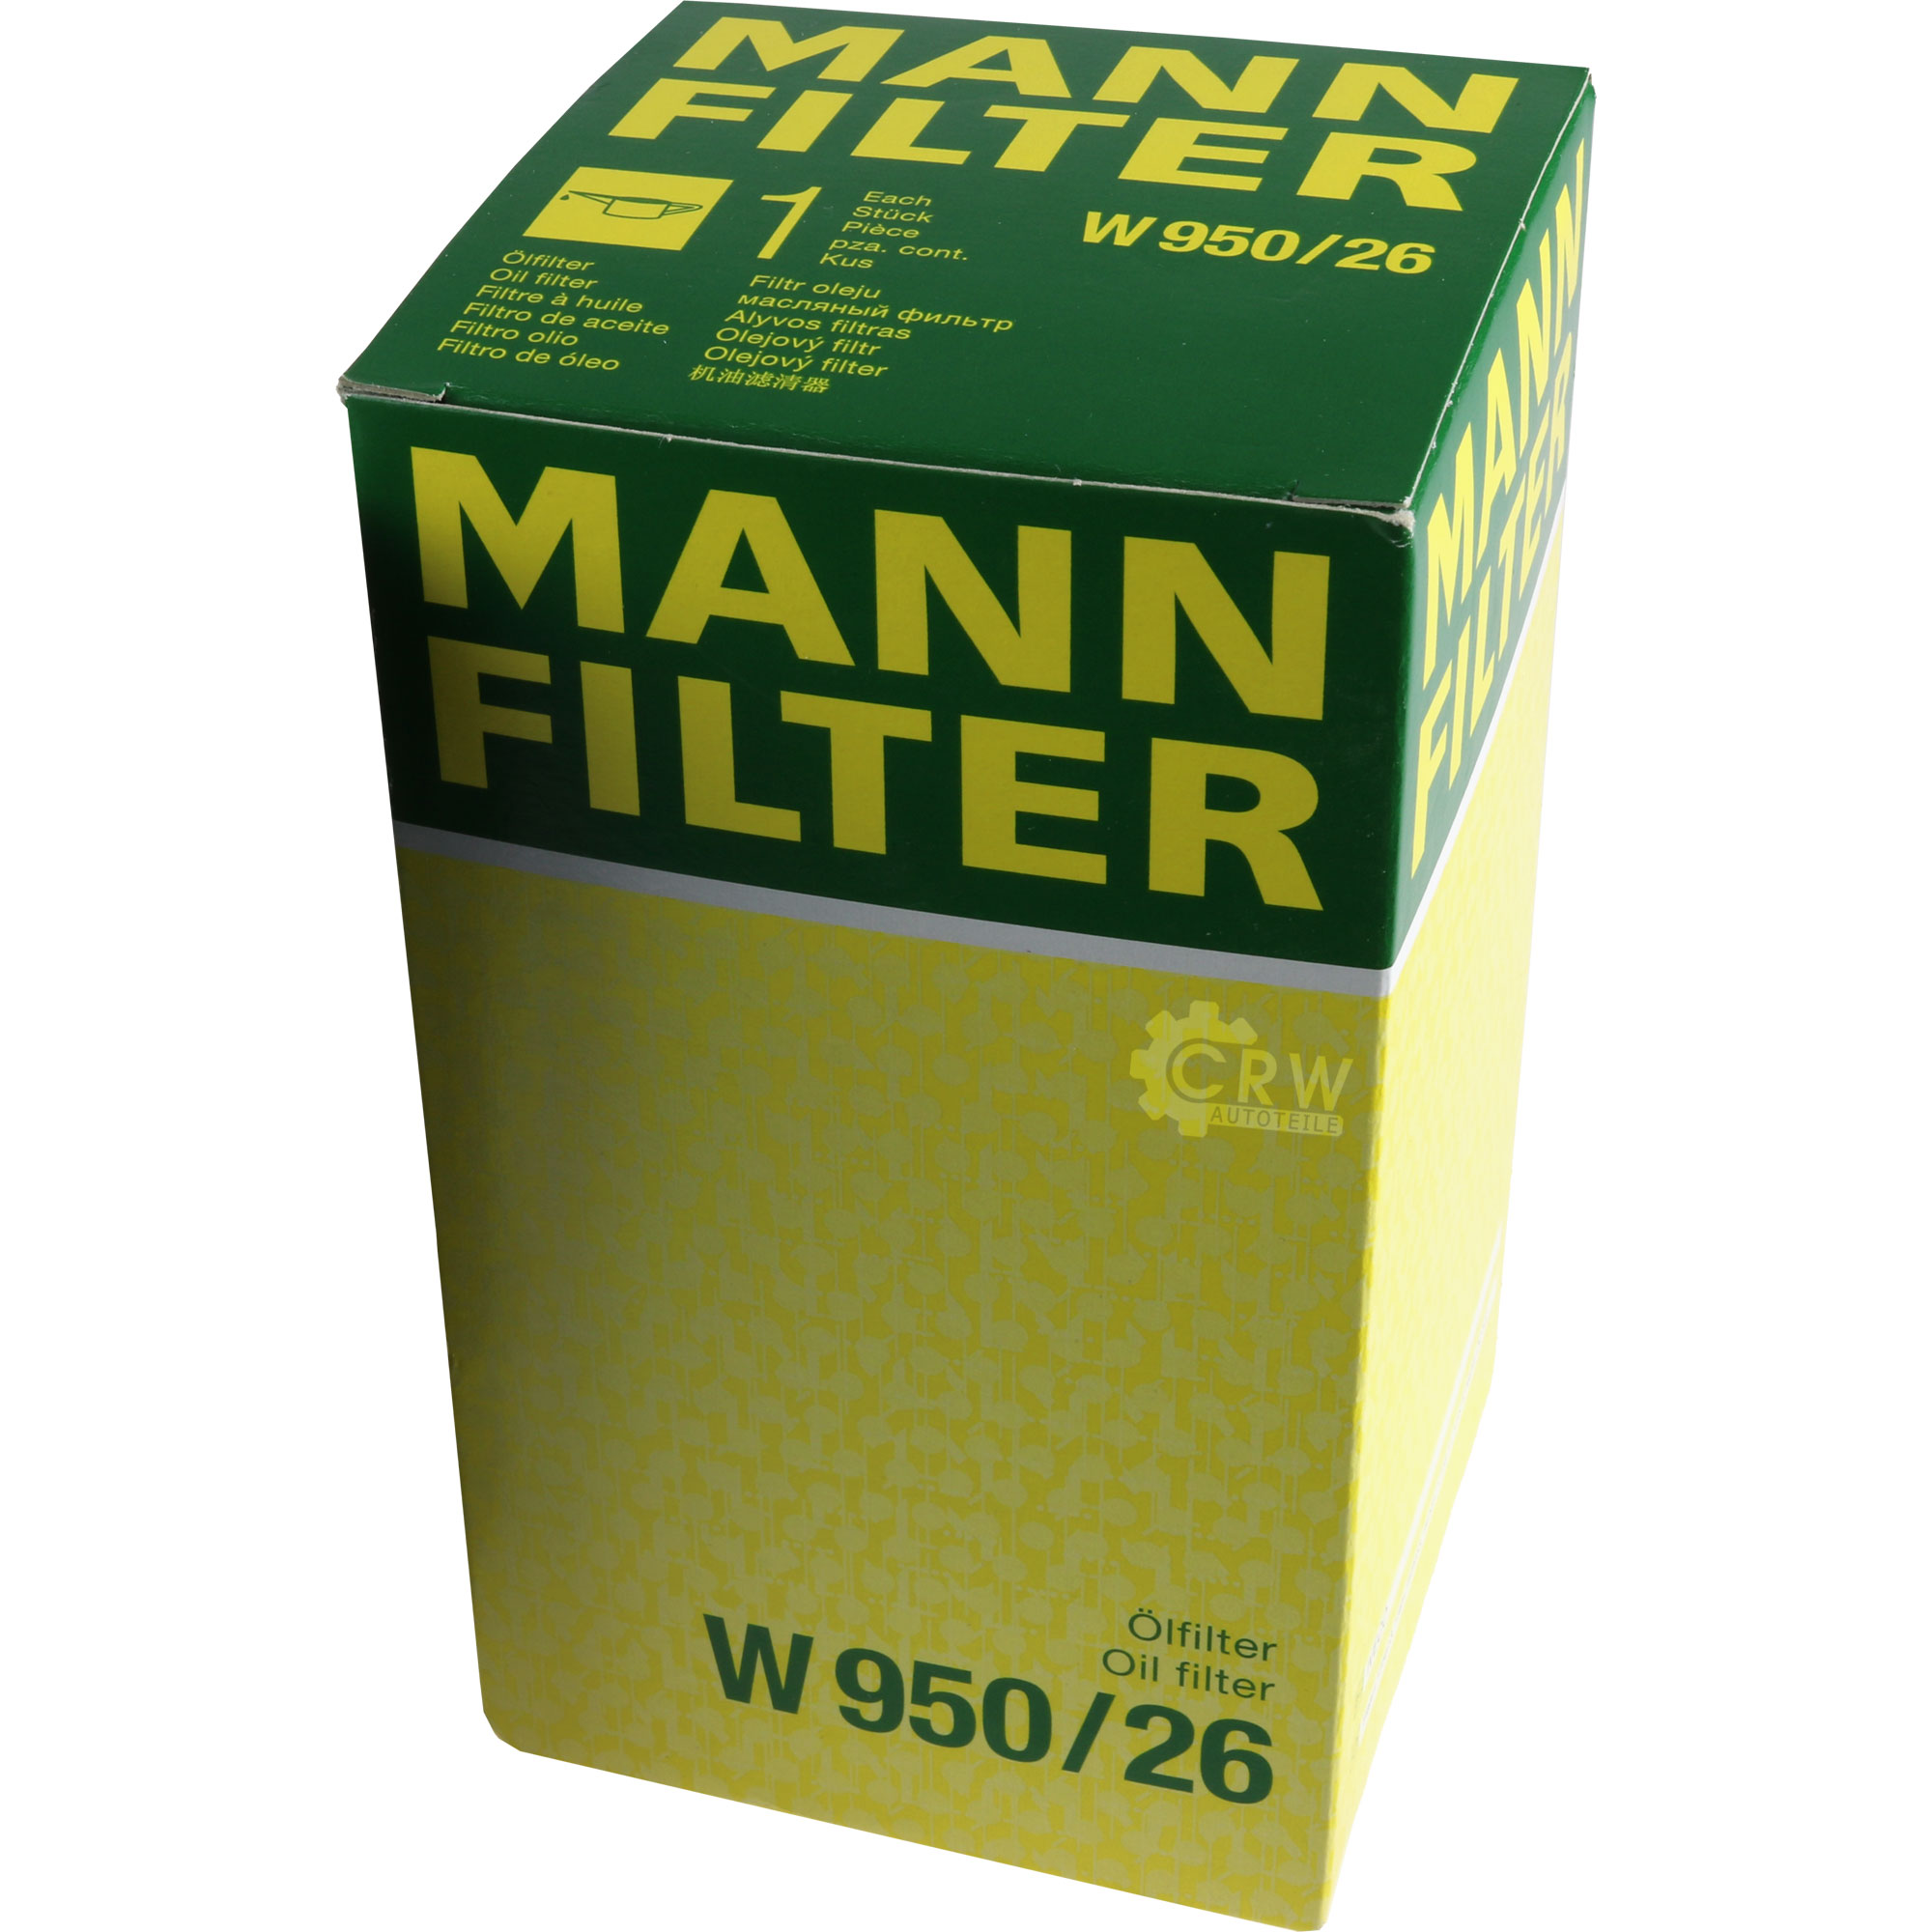 MANN-FILTER Ölfilter Oelfilter W 950/26 Oil Filter